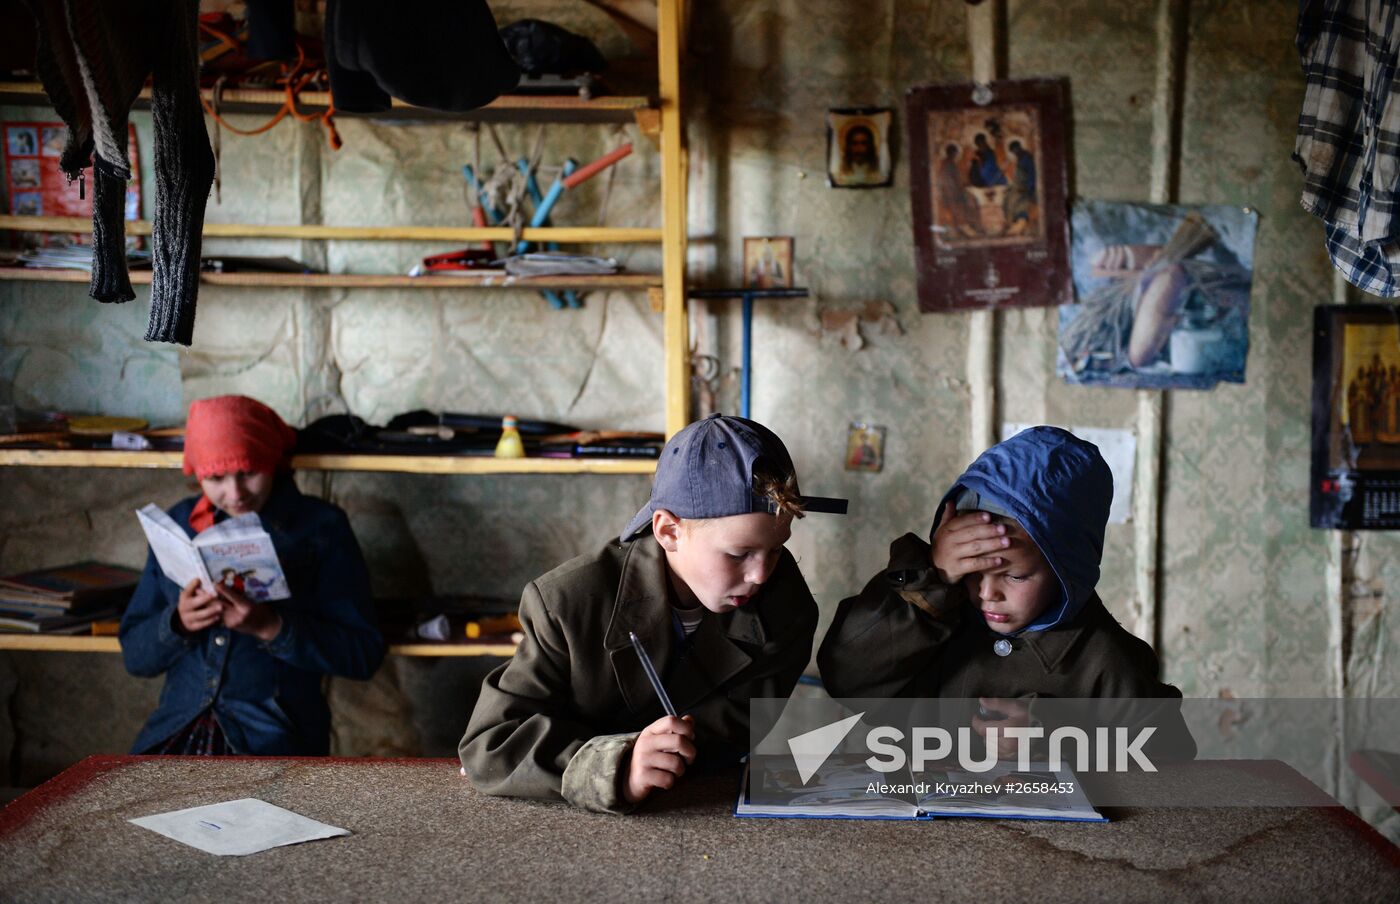 The Orthodox Christian community of St. Anthimus in the village of Poteryayevka